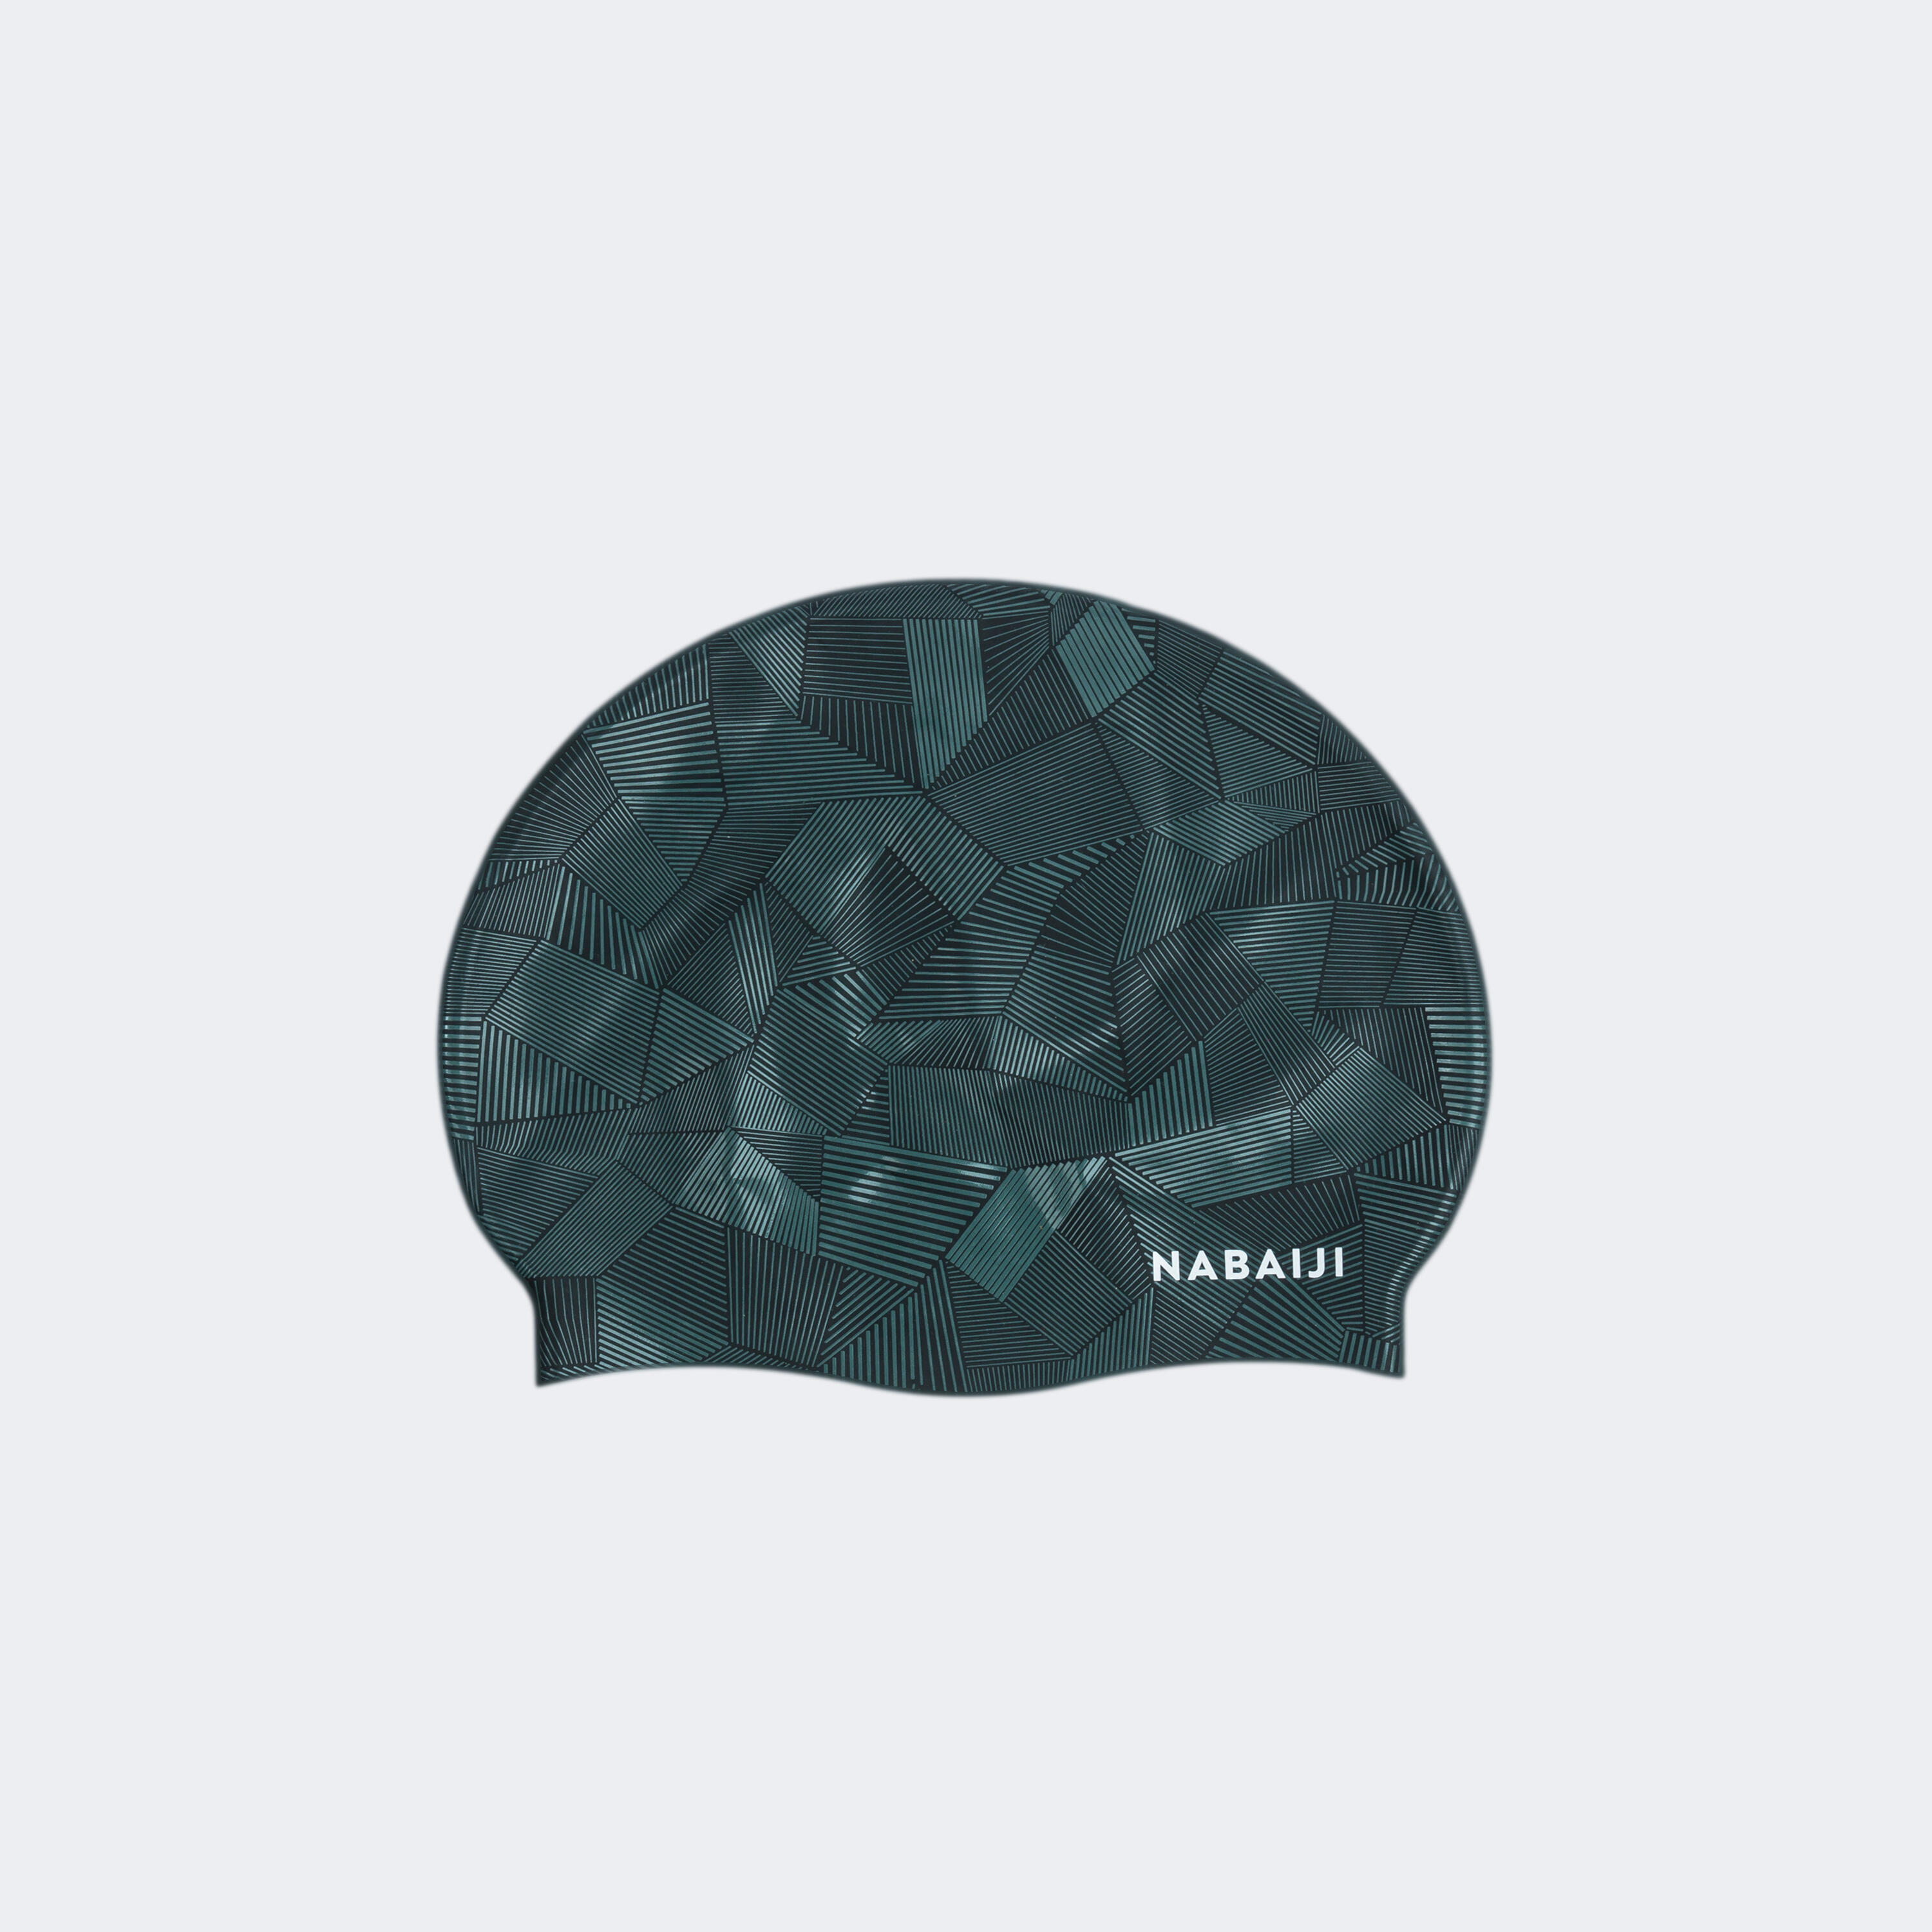 SILICONE swim cap - One size - Geol black green 1/2